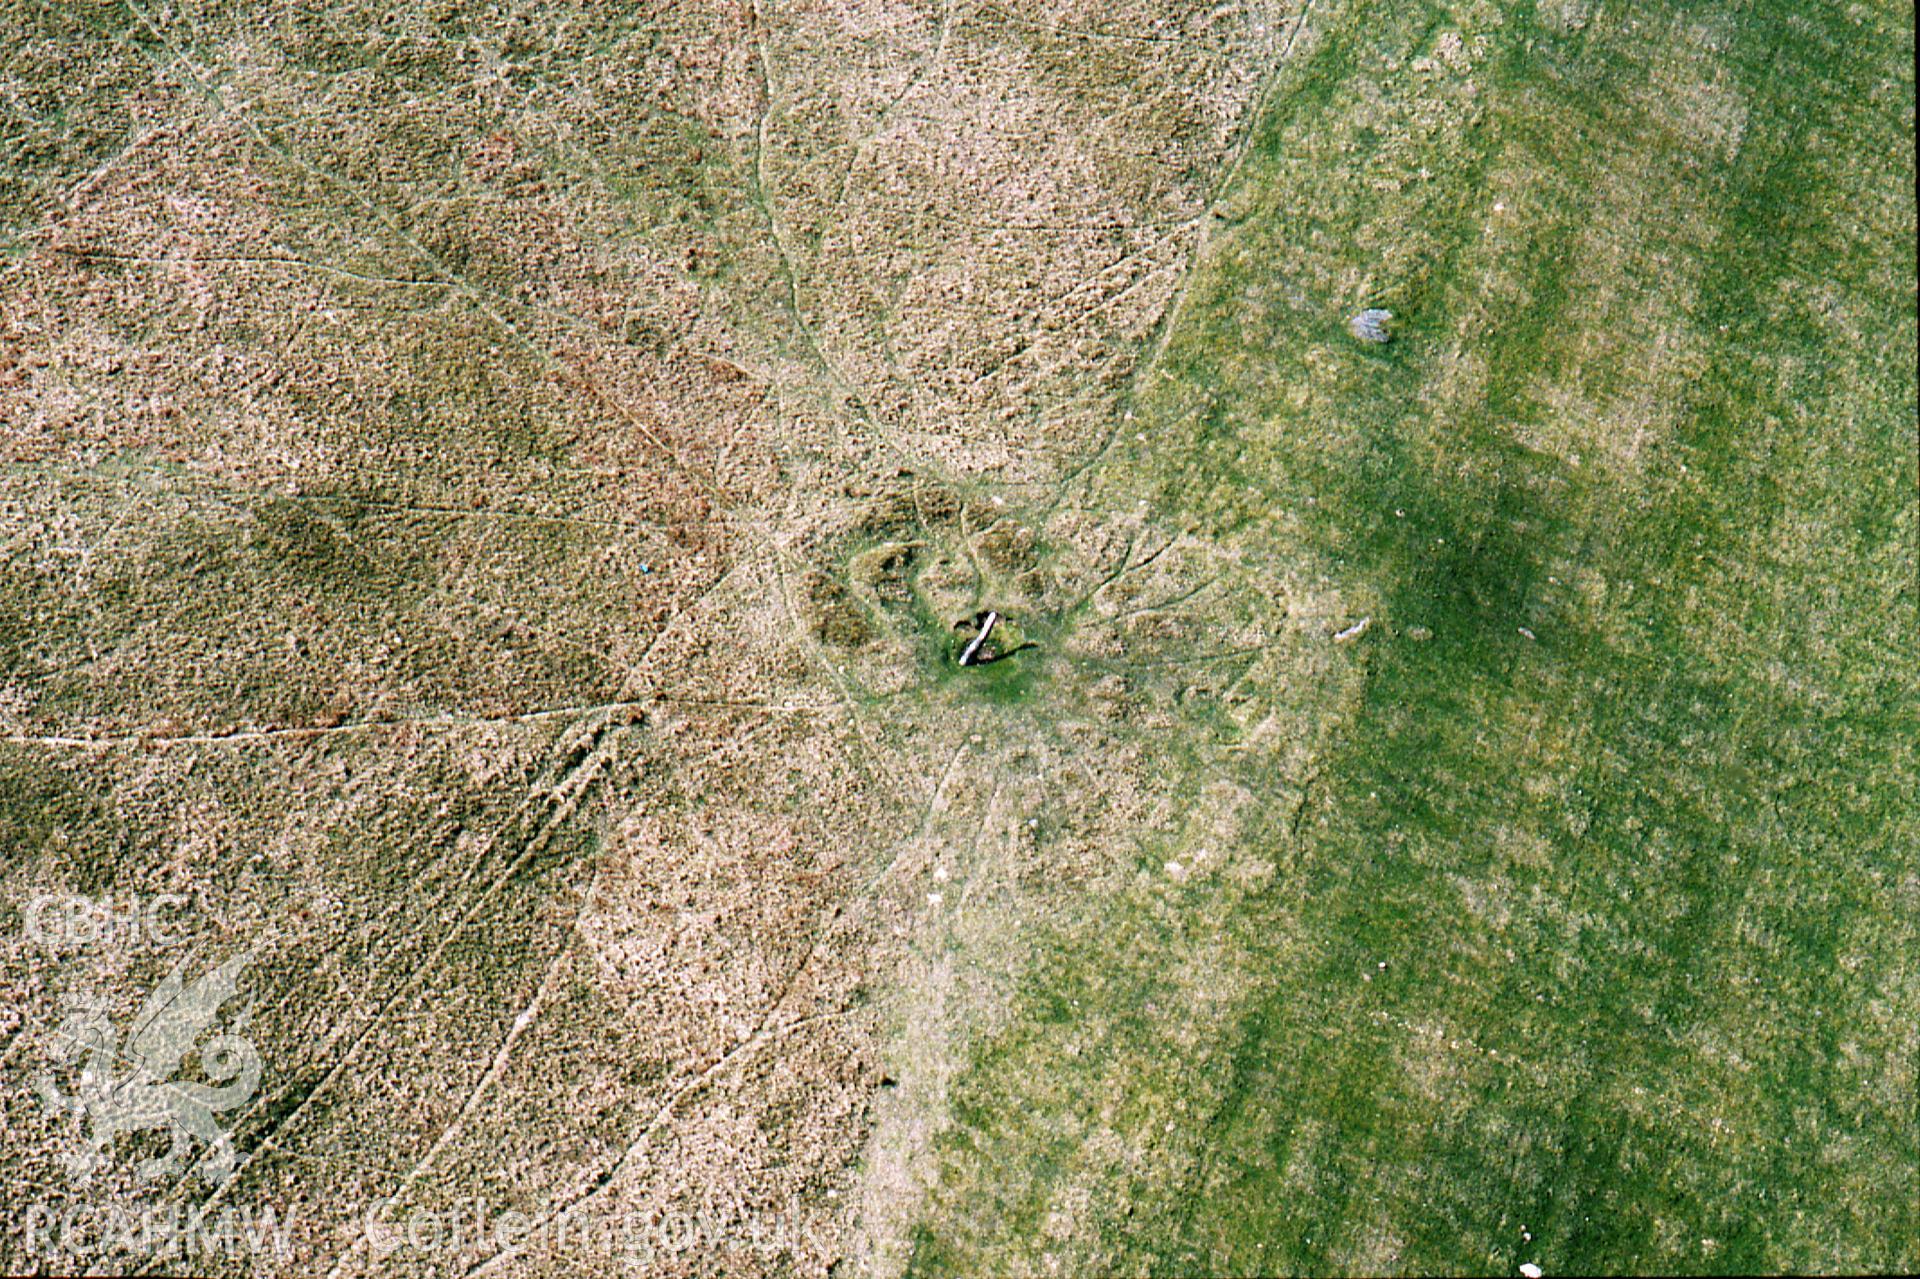 RCAHMW colour slide oblique aerial photograph of Cefn Gelli-gaer Inscribed Stone, Bedlinog, taken by C.R. Musson, 18/04/94